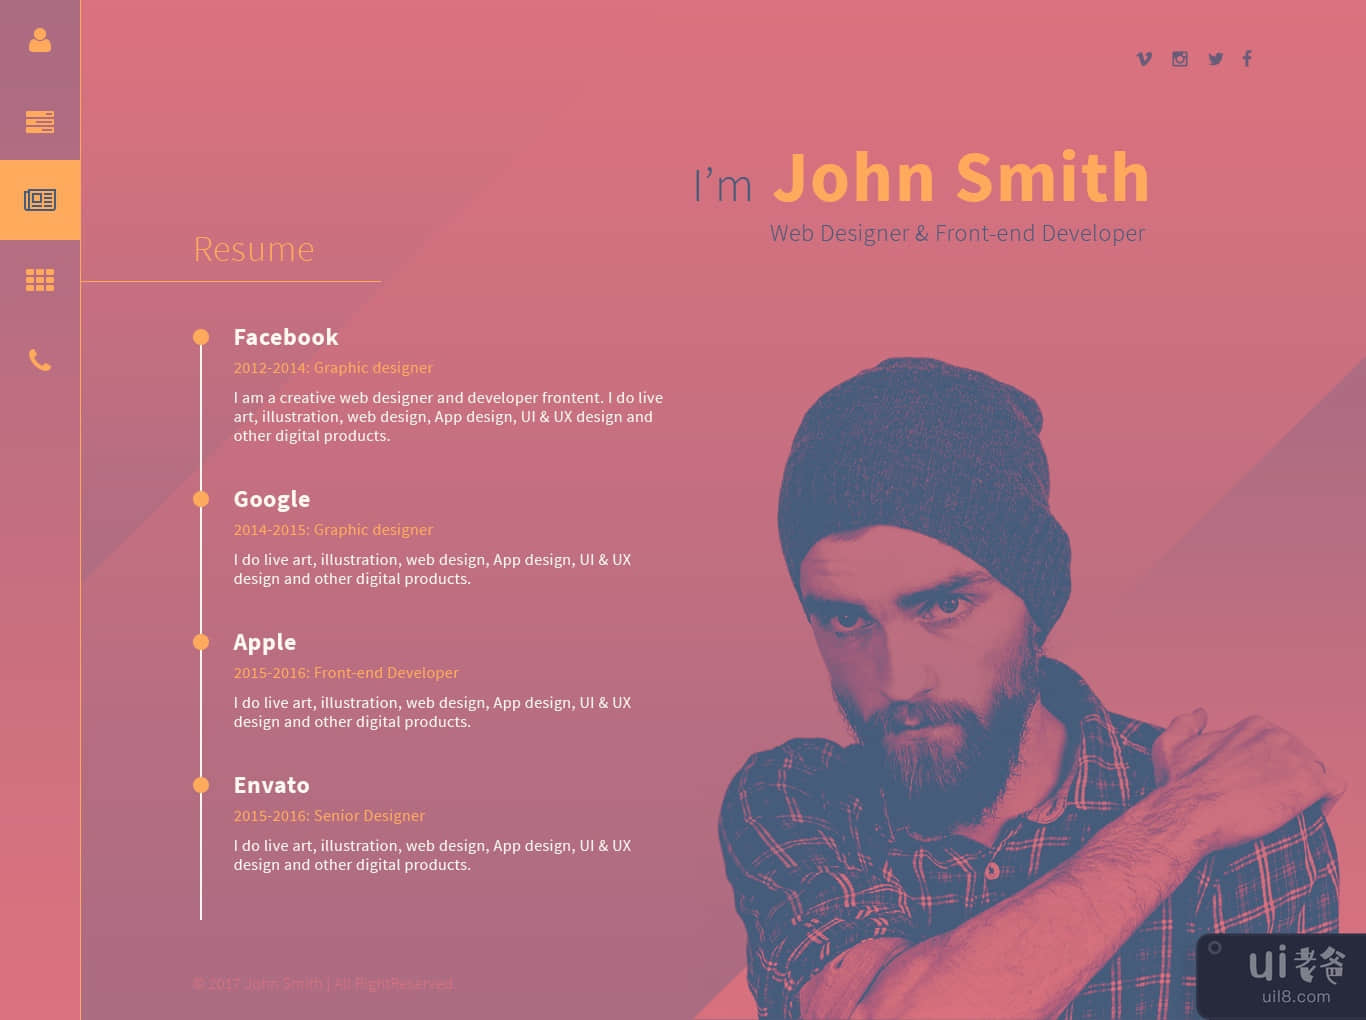 JohnSmith - 设计师作品集网站(JohnSmith - Designer’s Portfolio Website)插图